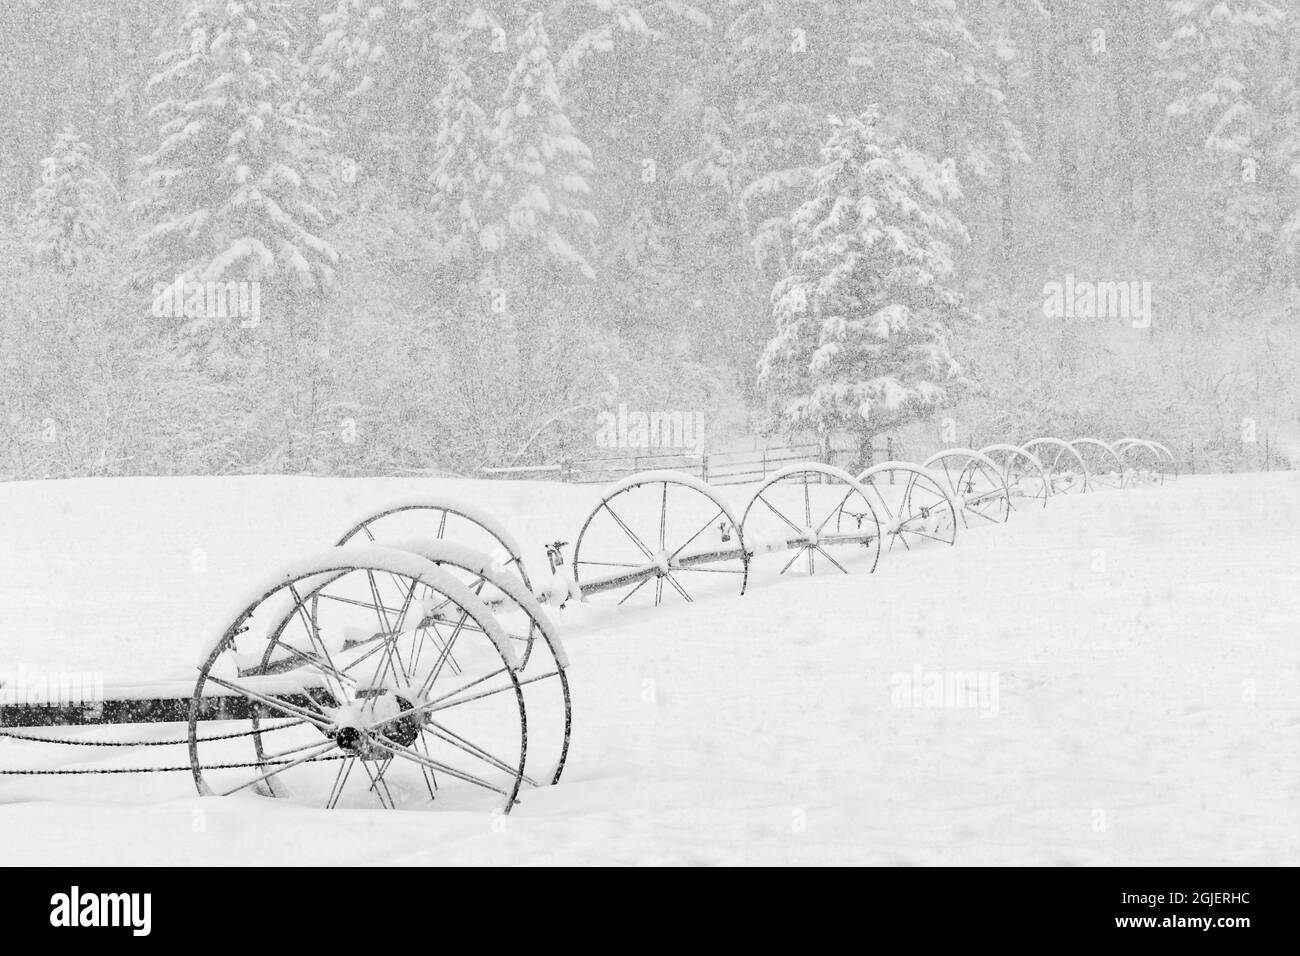 Irrigation sprinkler system in winter snowstorm, Kalispell, Montana Stock Photo